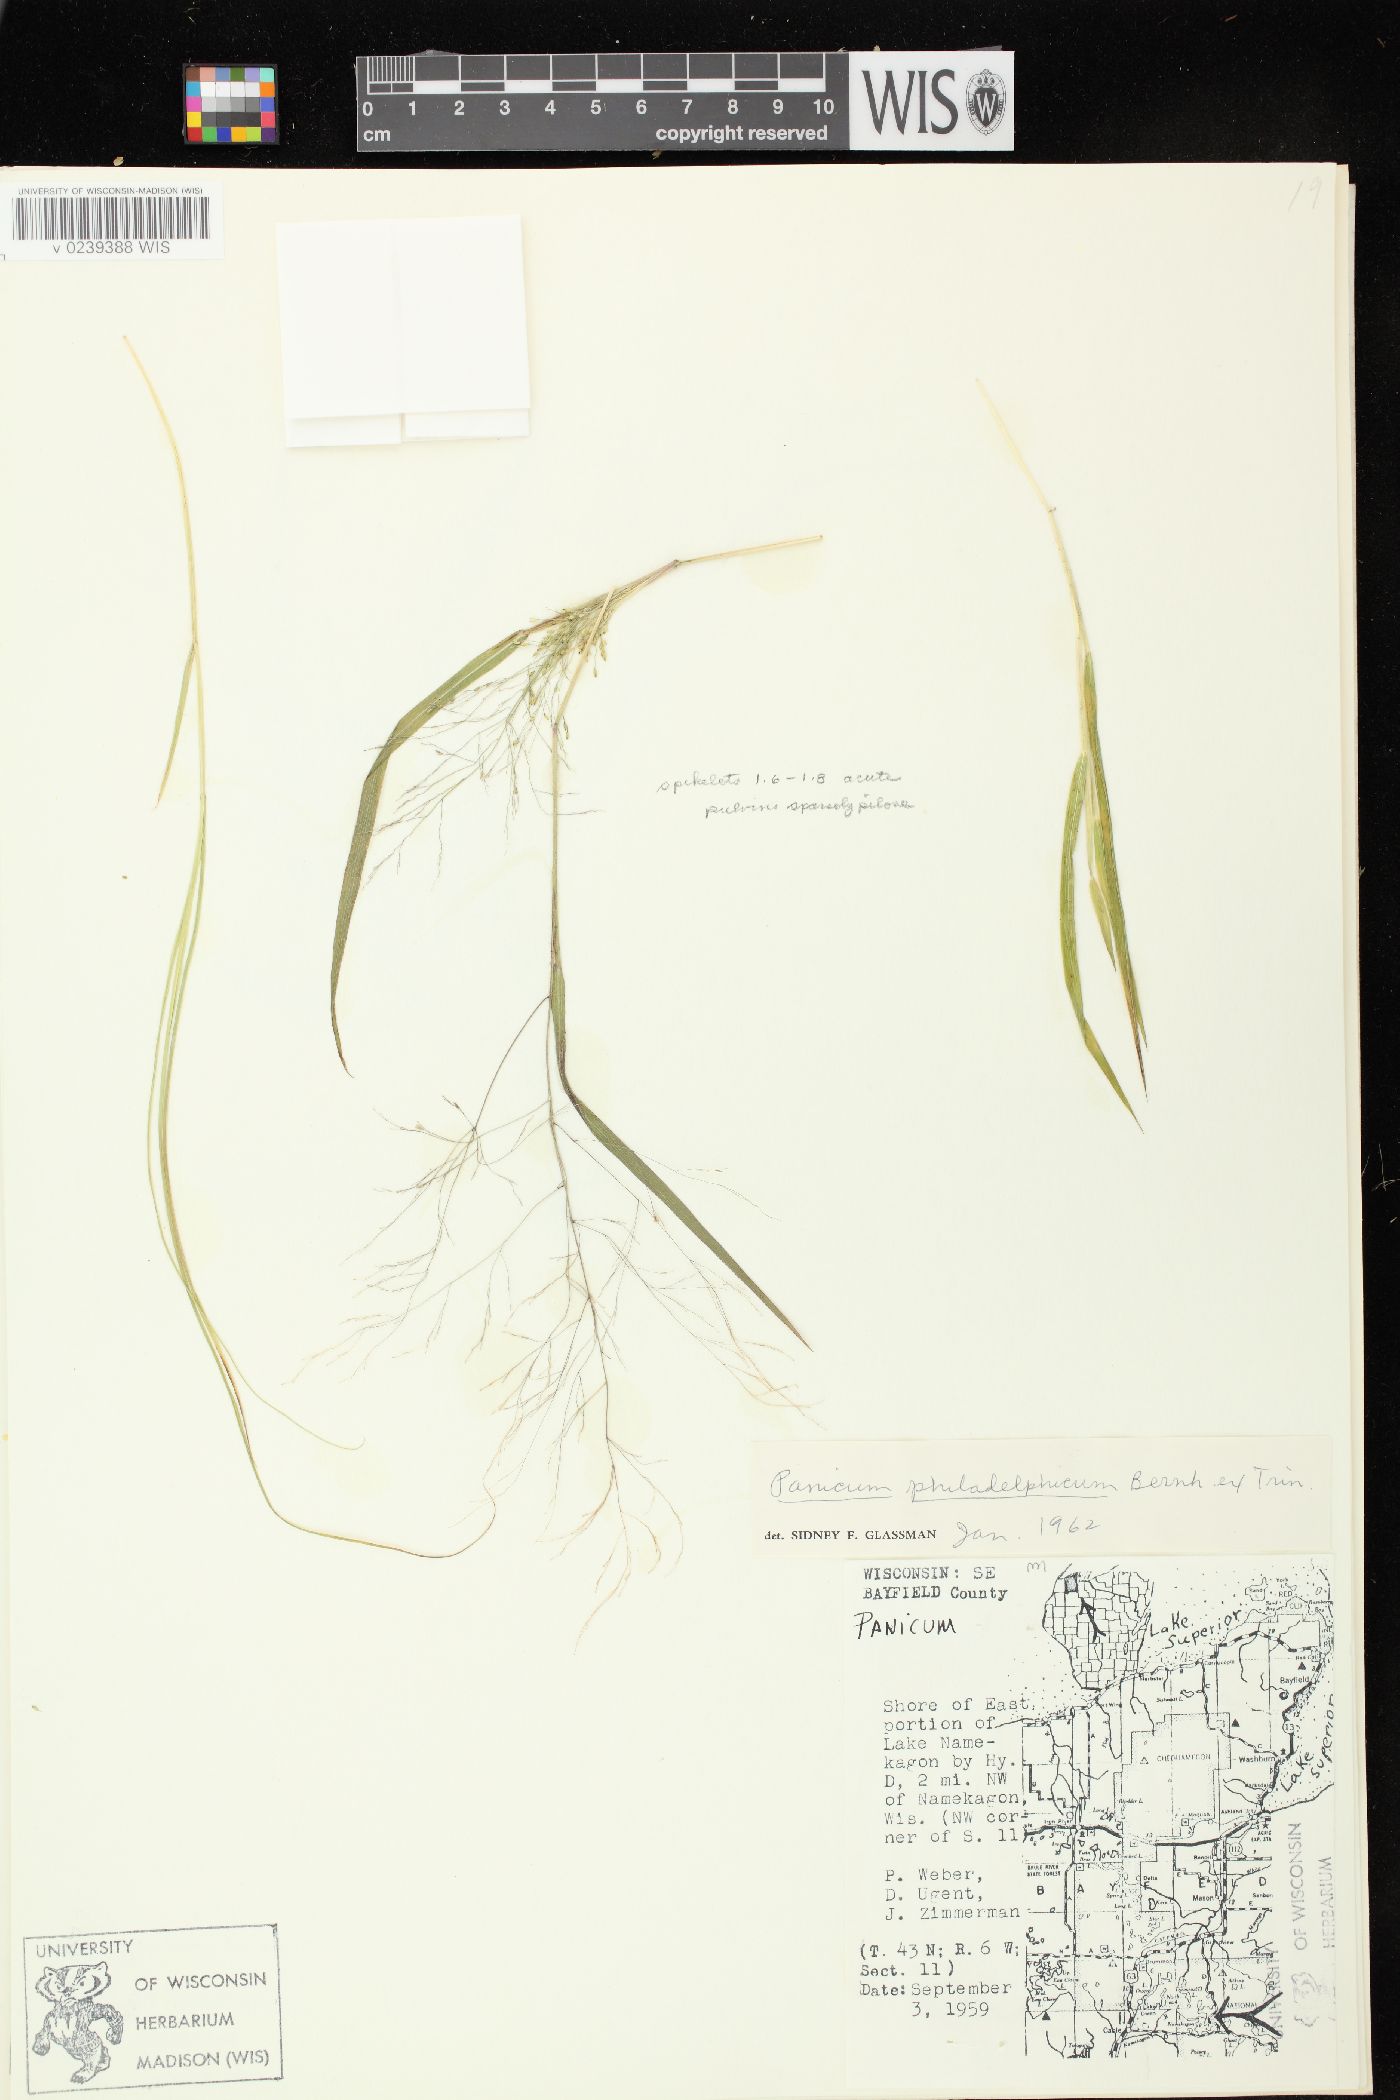 Panicum philadelphicum image